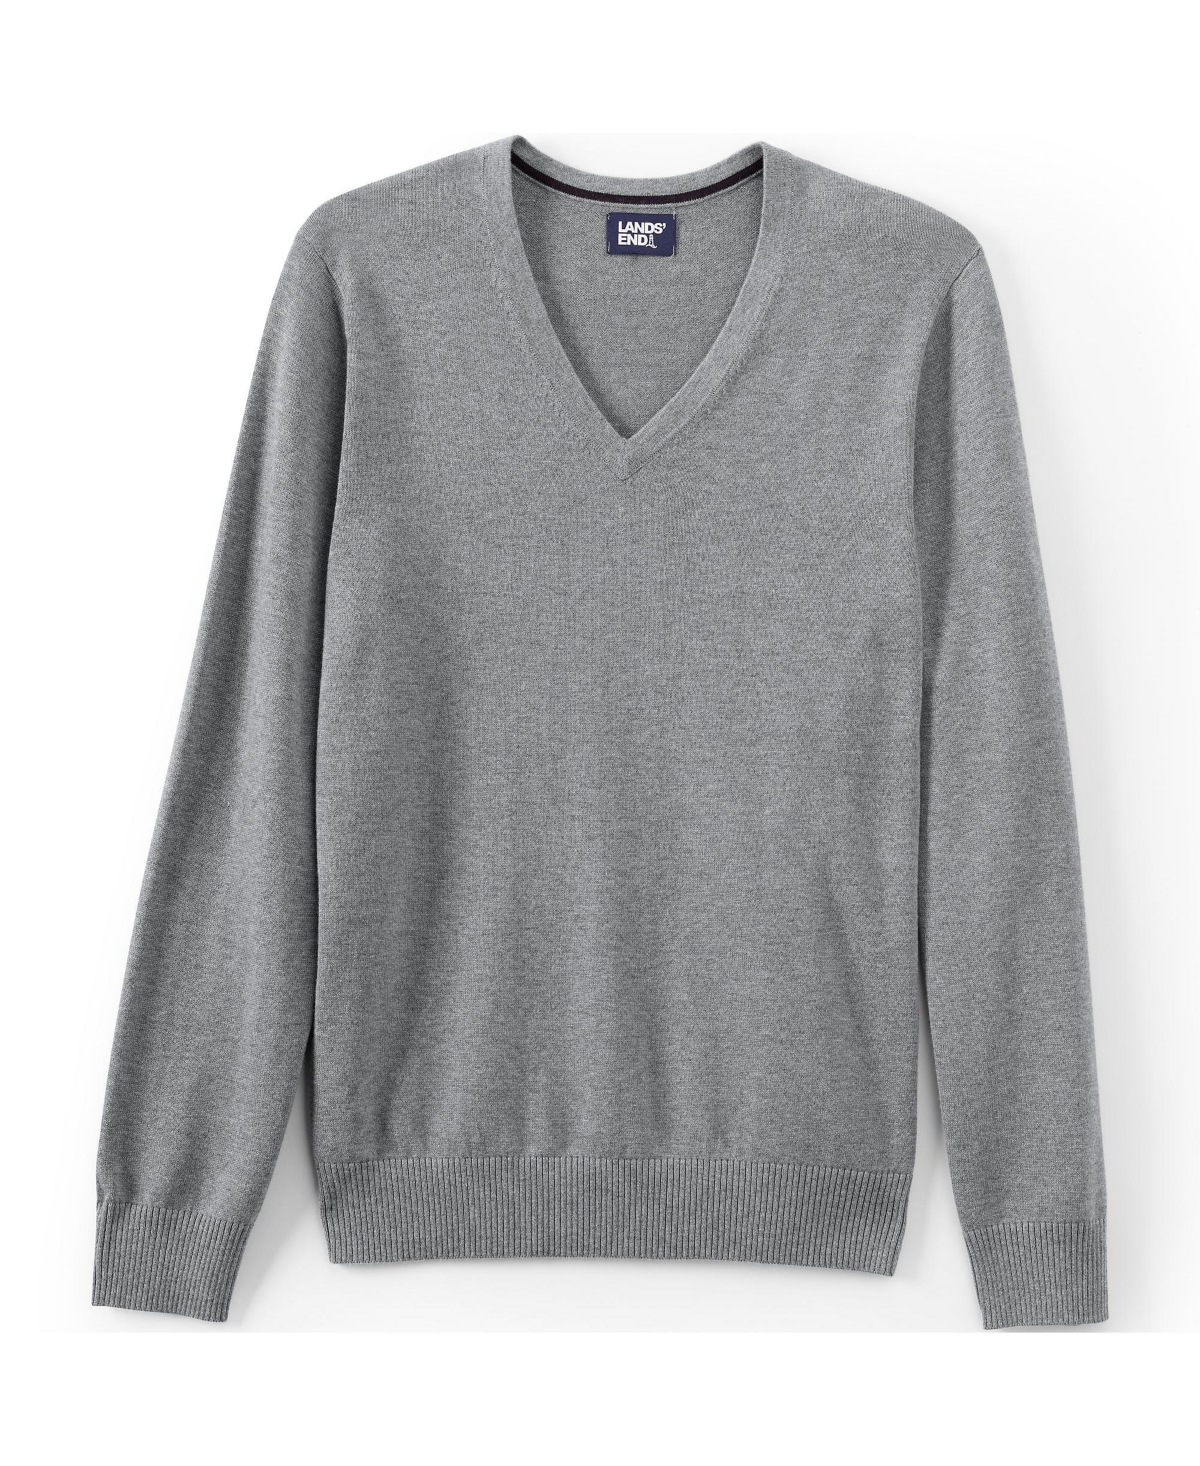 Men's School Uniform Unisex Cotton Modal Vneck Pullover Sweater - Pewter heather